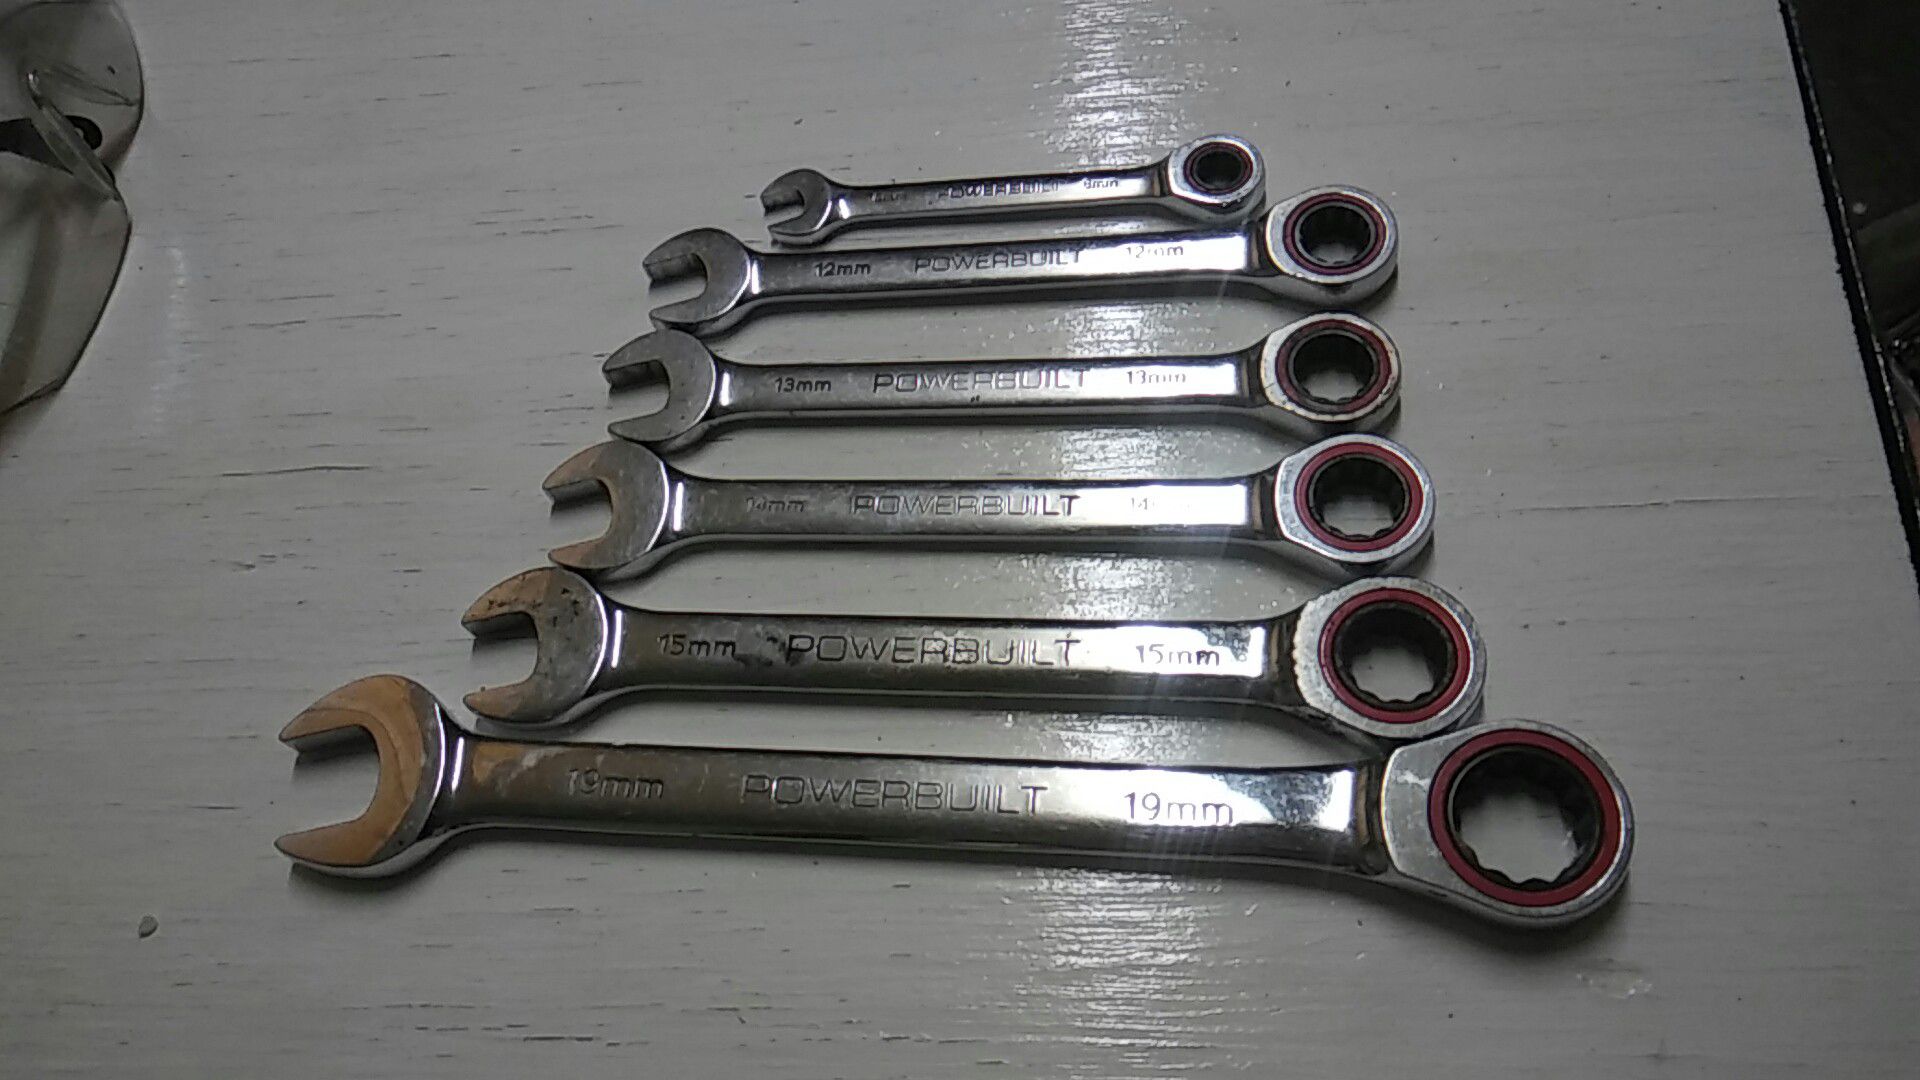 Powerbuilt ratchet wrench set